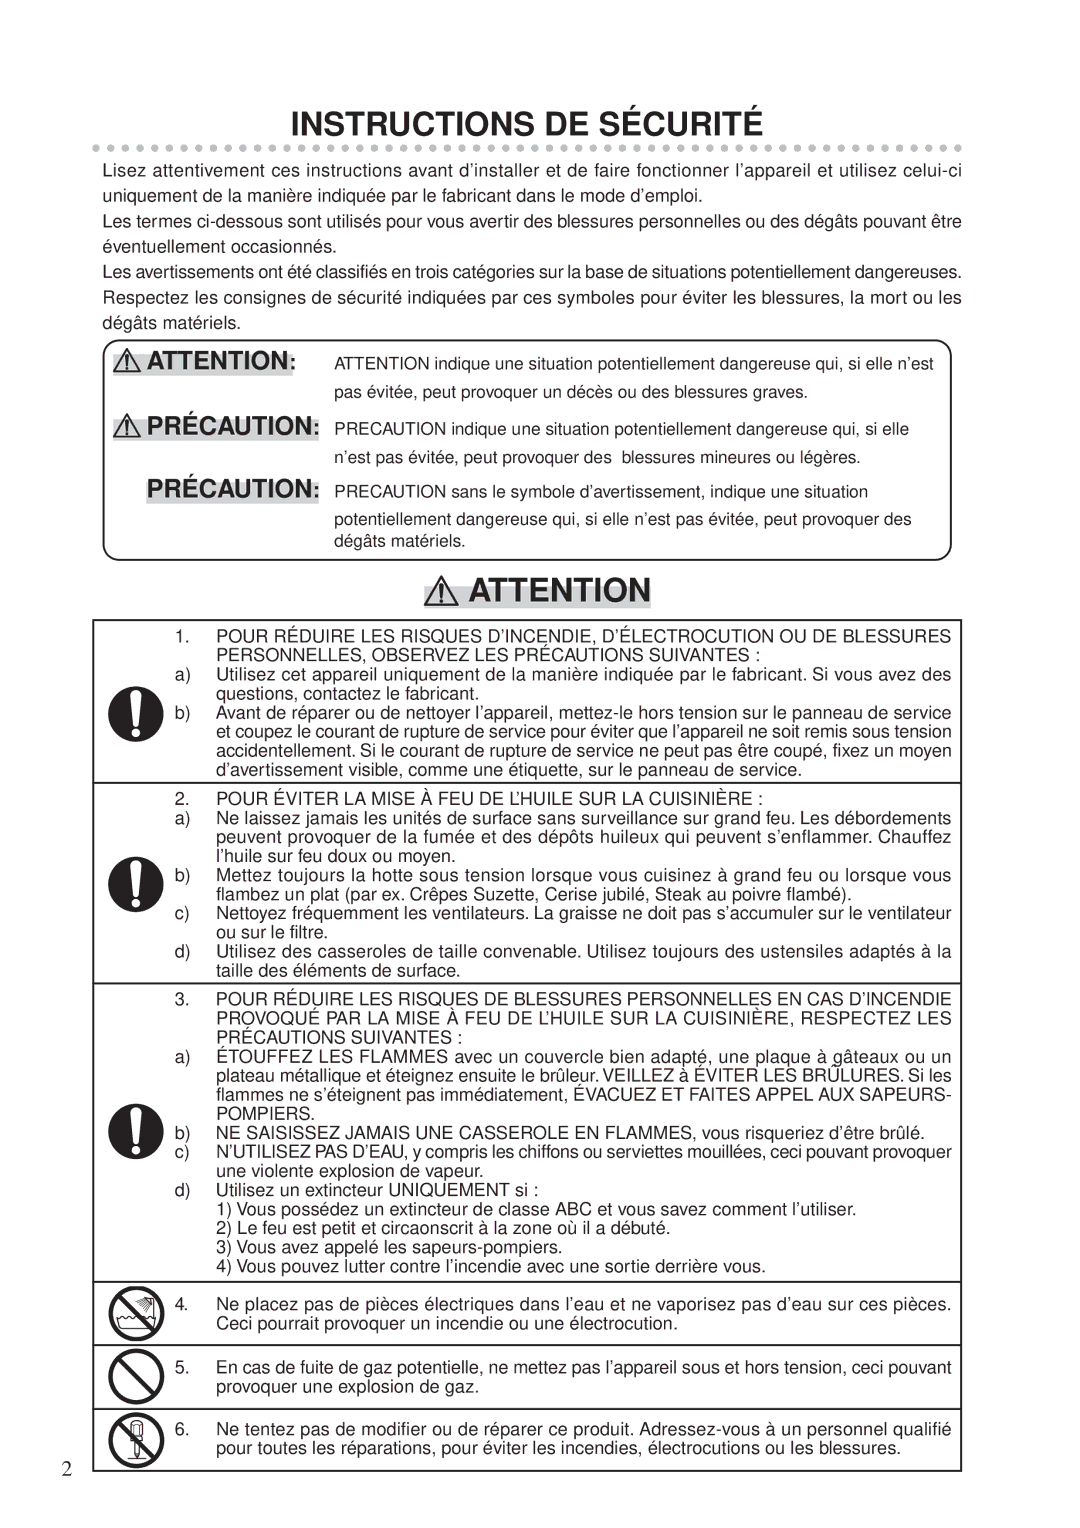 Fujioh BUF-0 operation manual Instructions DE Sécurité 